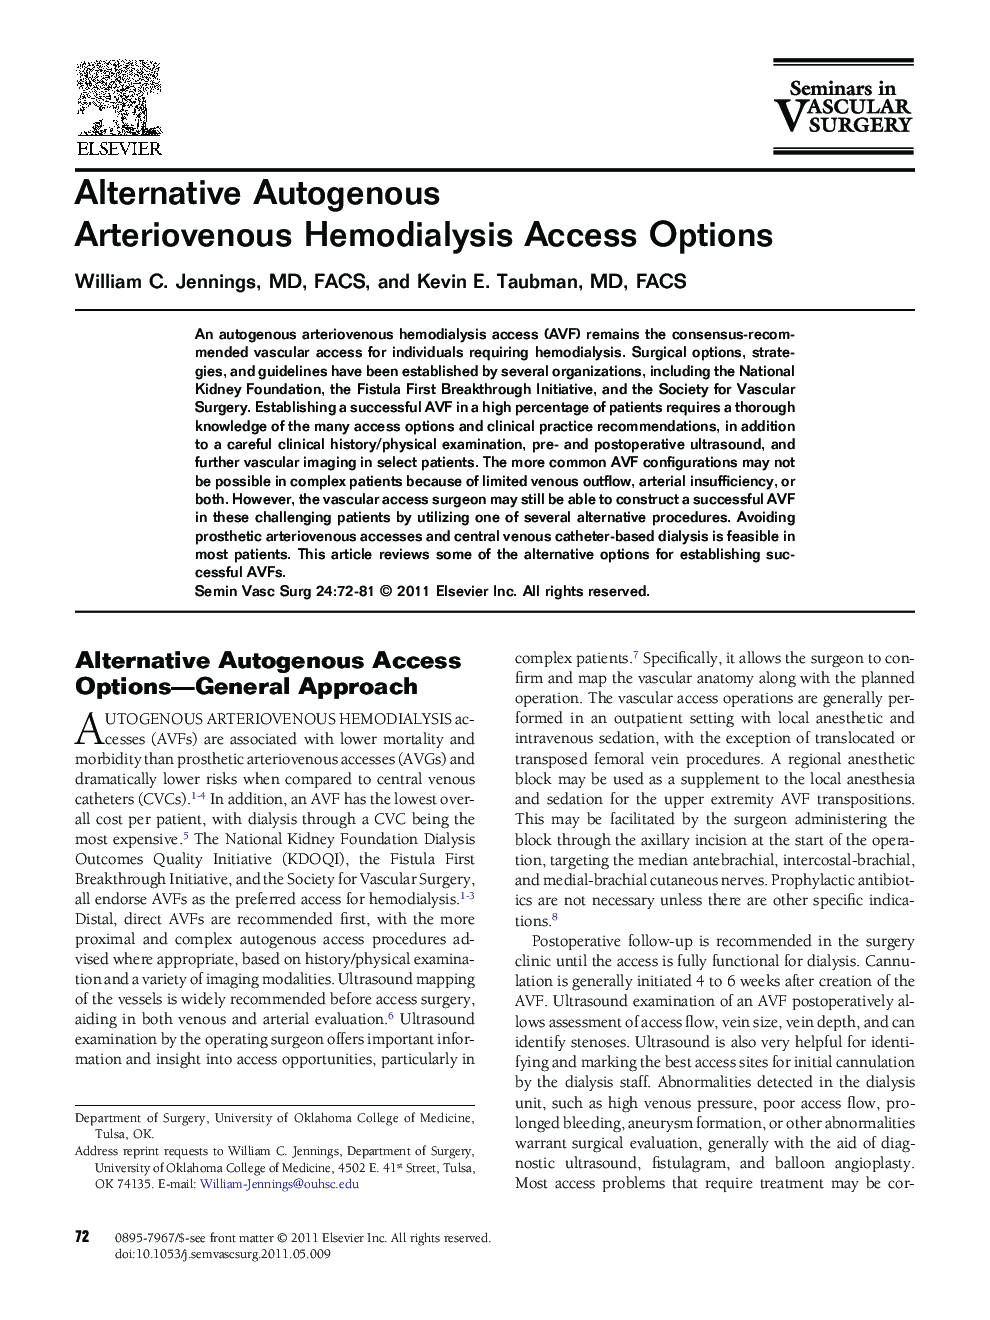 Alternative Autogenous Arteriovenous Hemodialysis Access Options